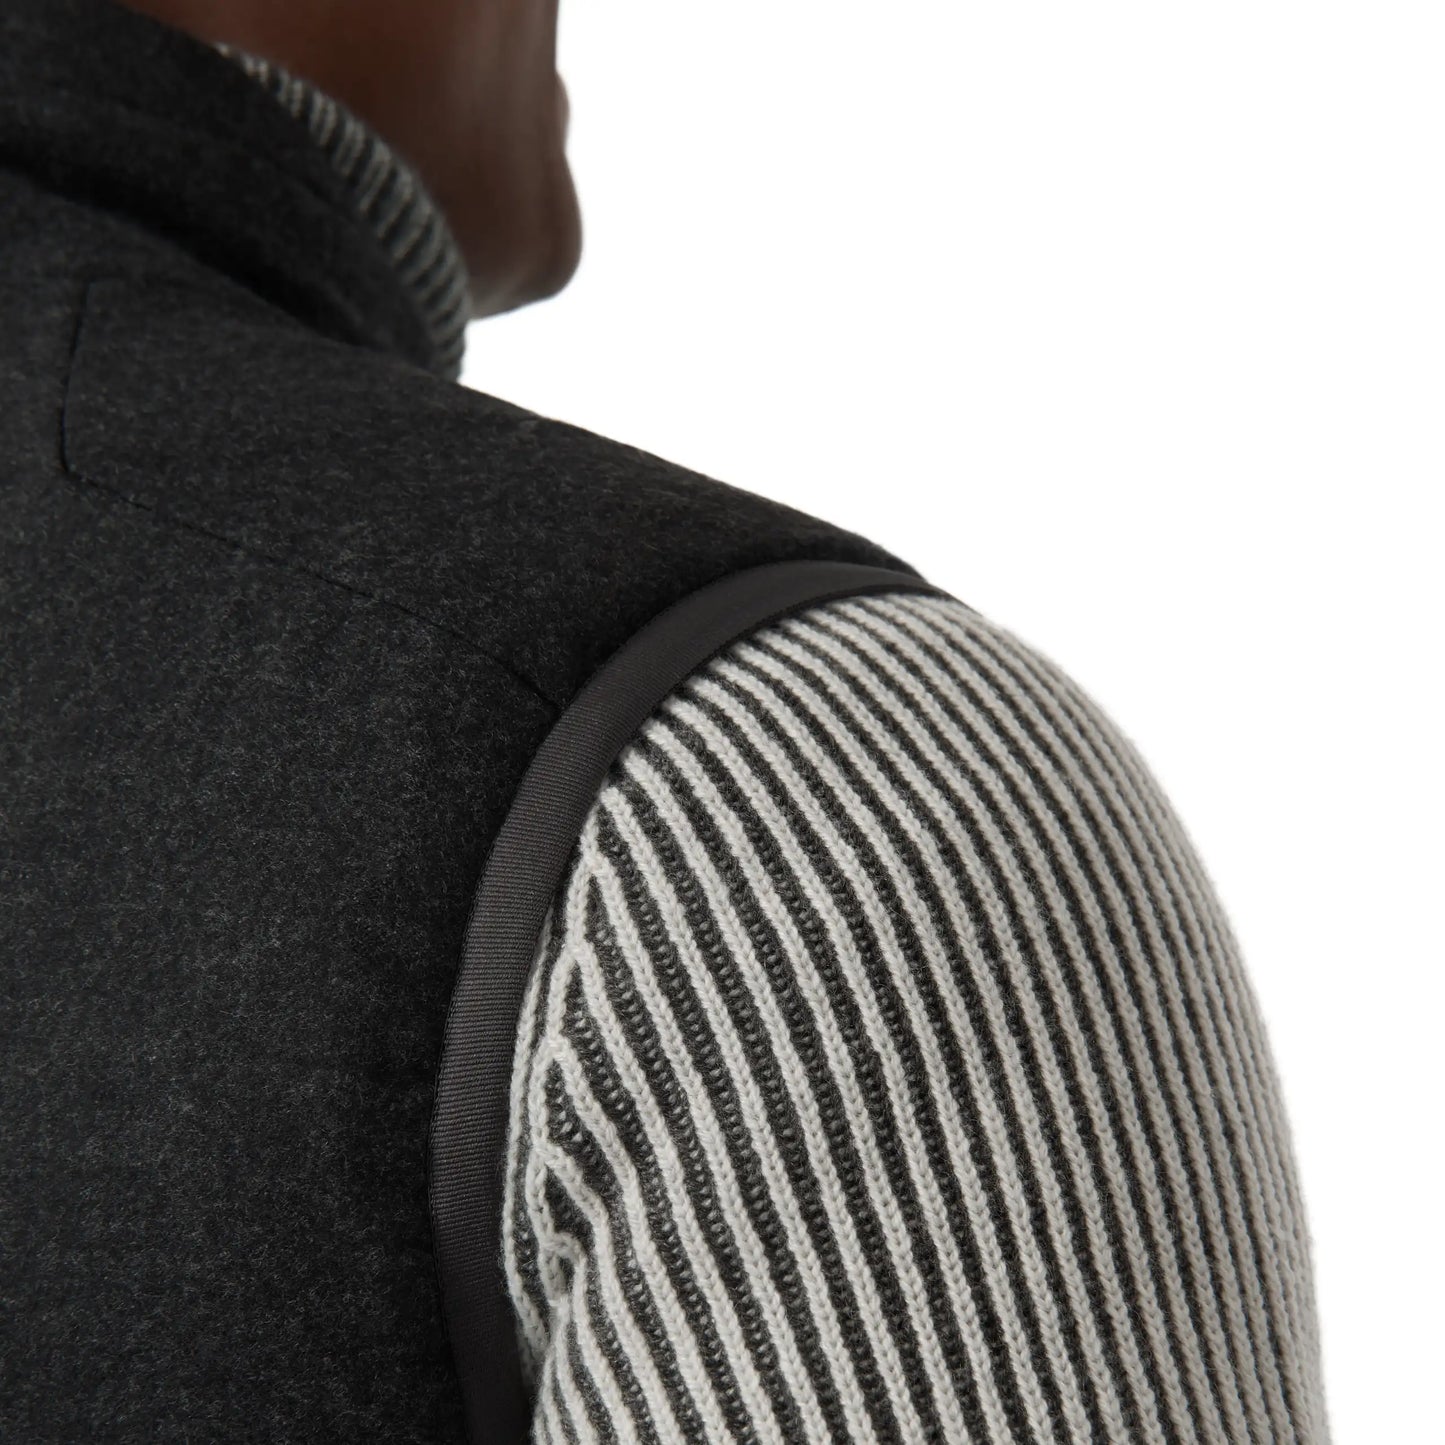 Virgin Wool Vest in Graphite Grey